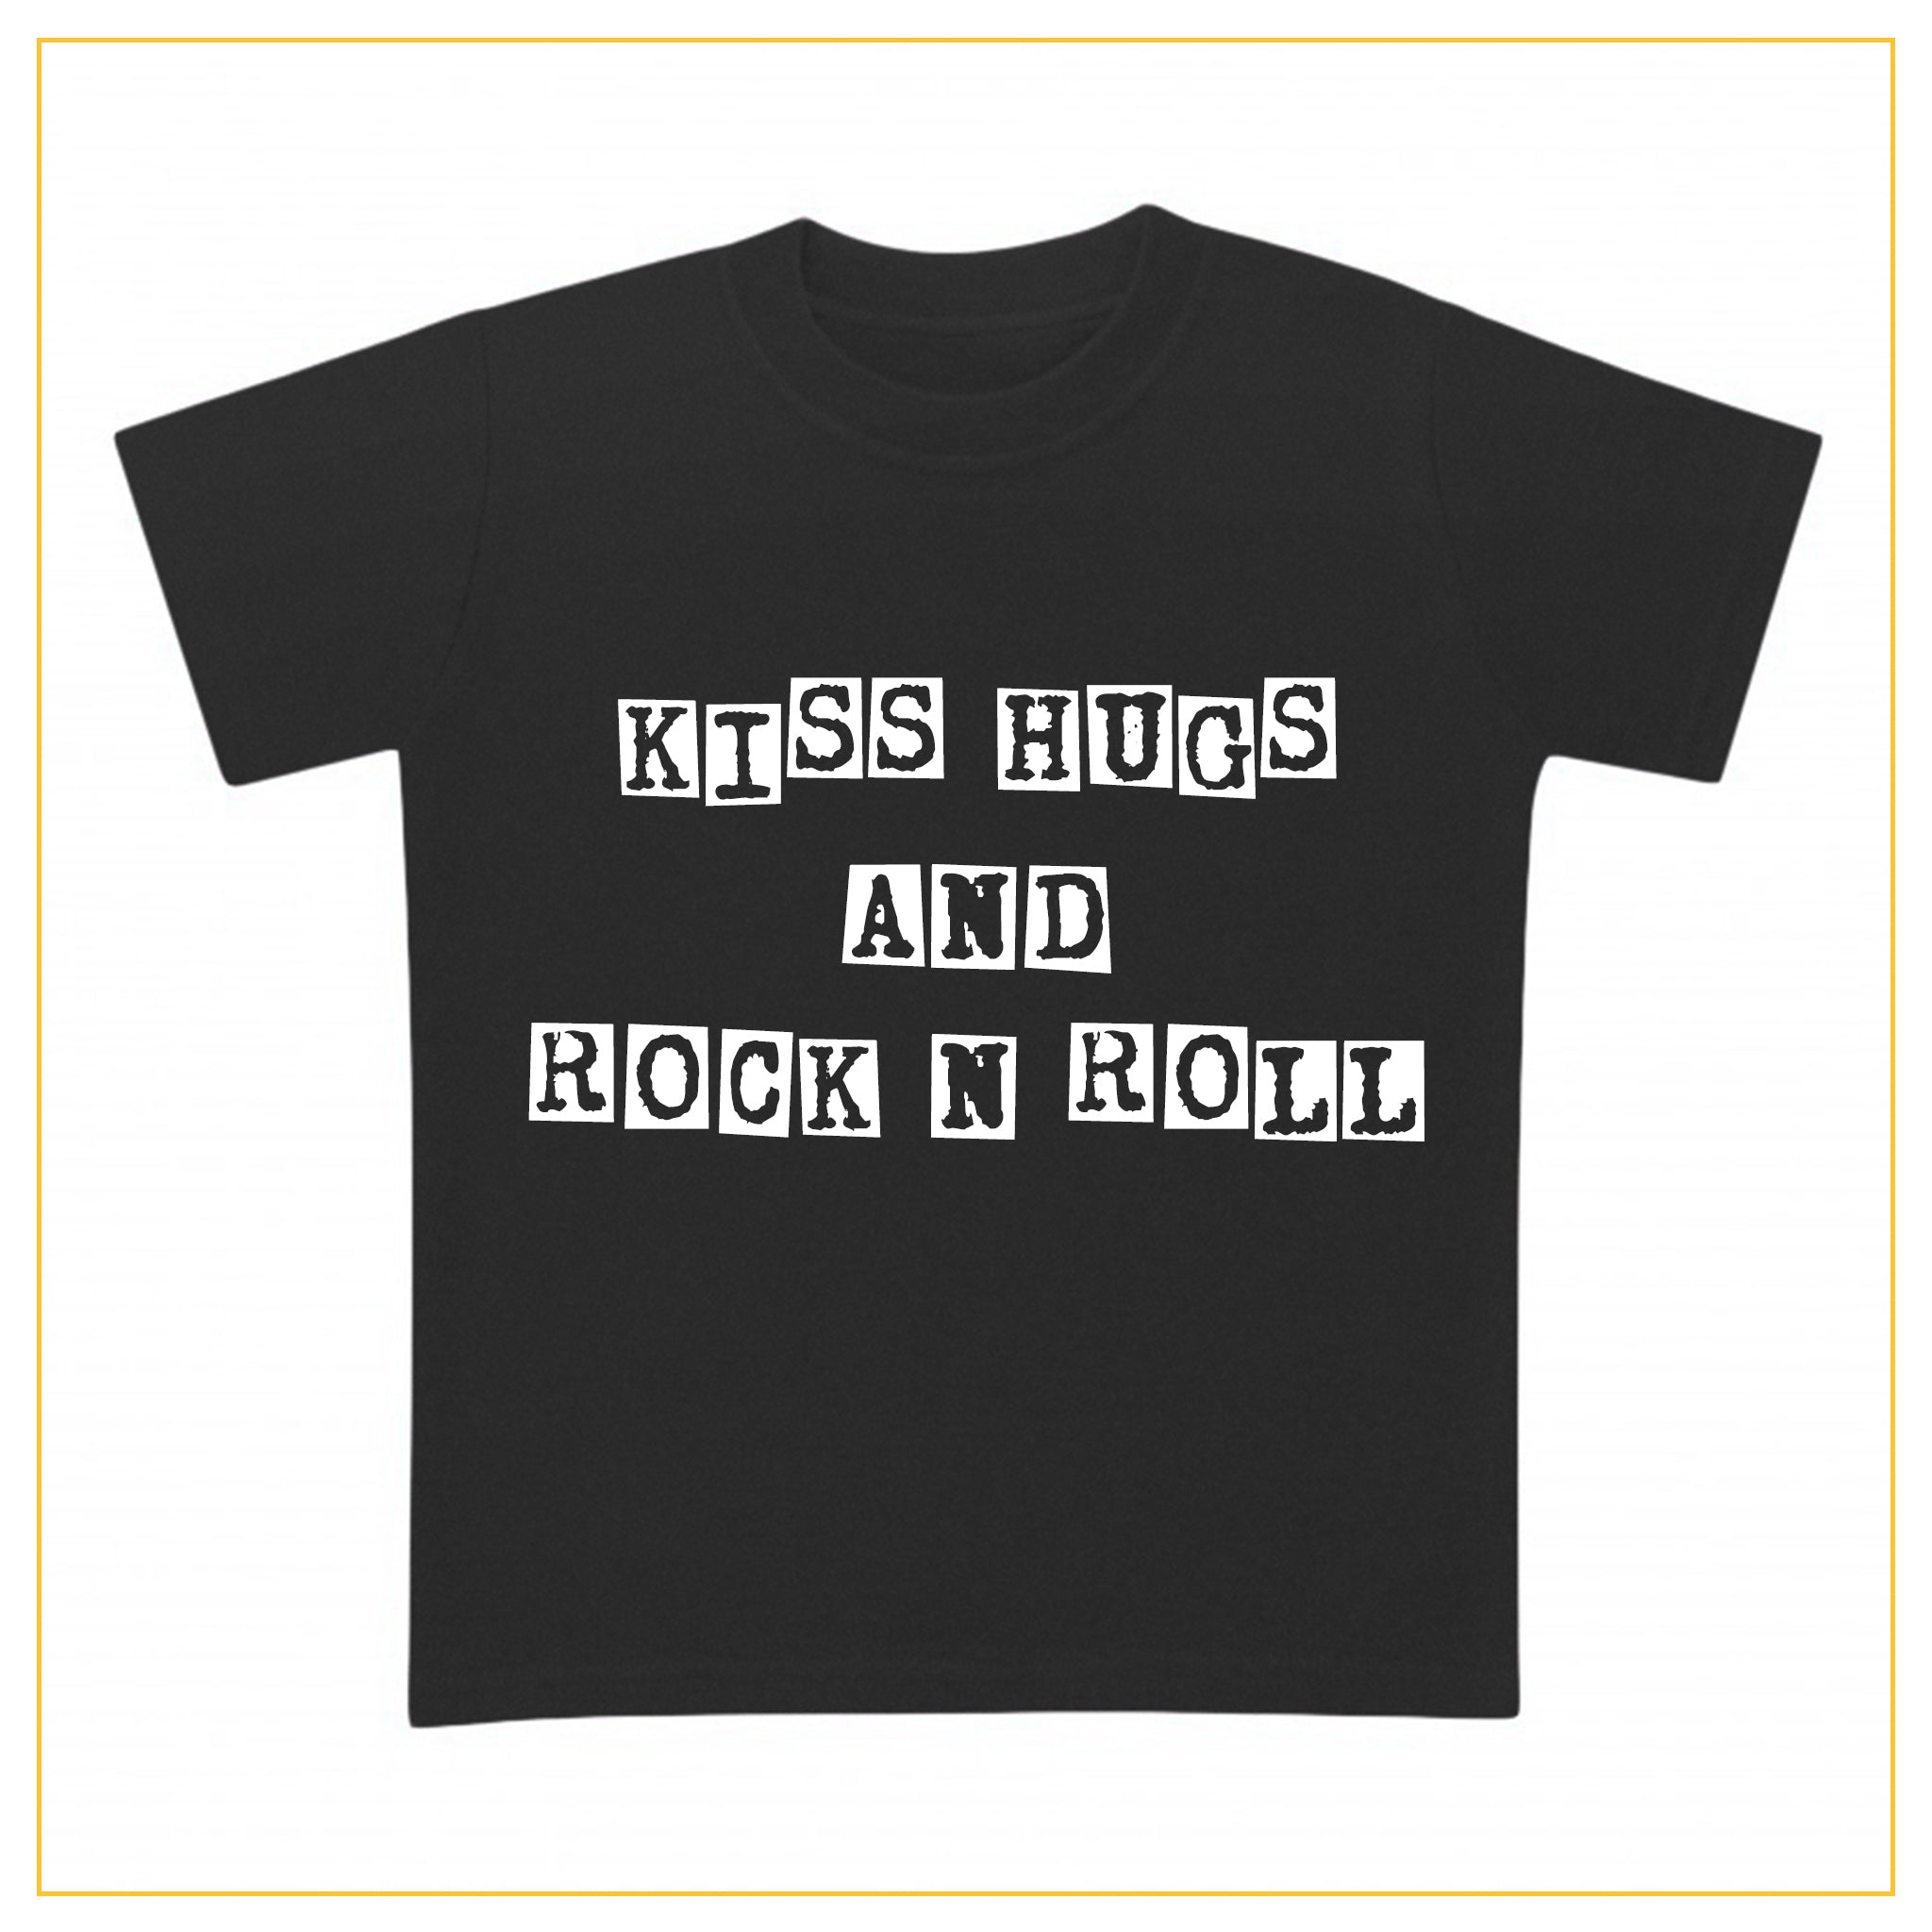 kiss hugs and rock n roll kids t-shirt in black